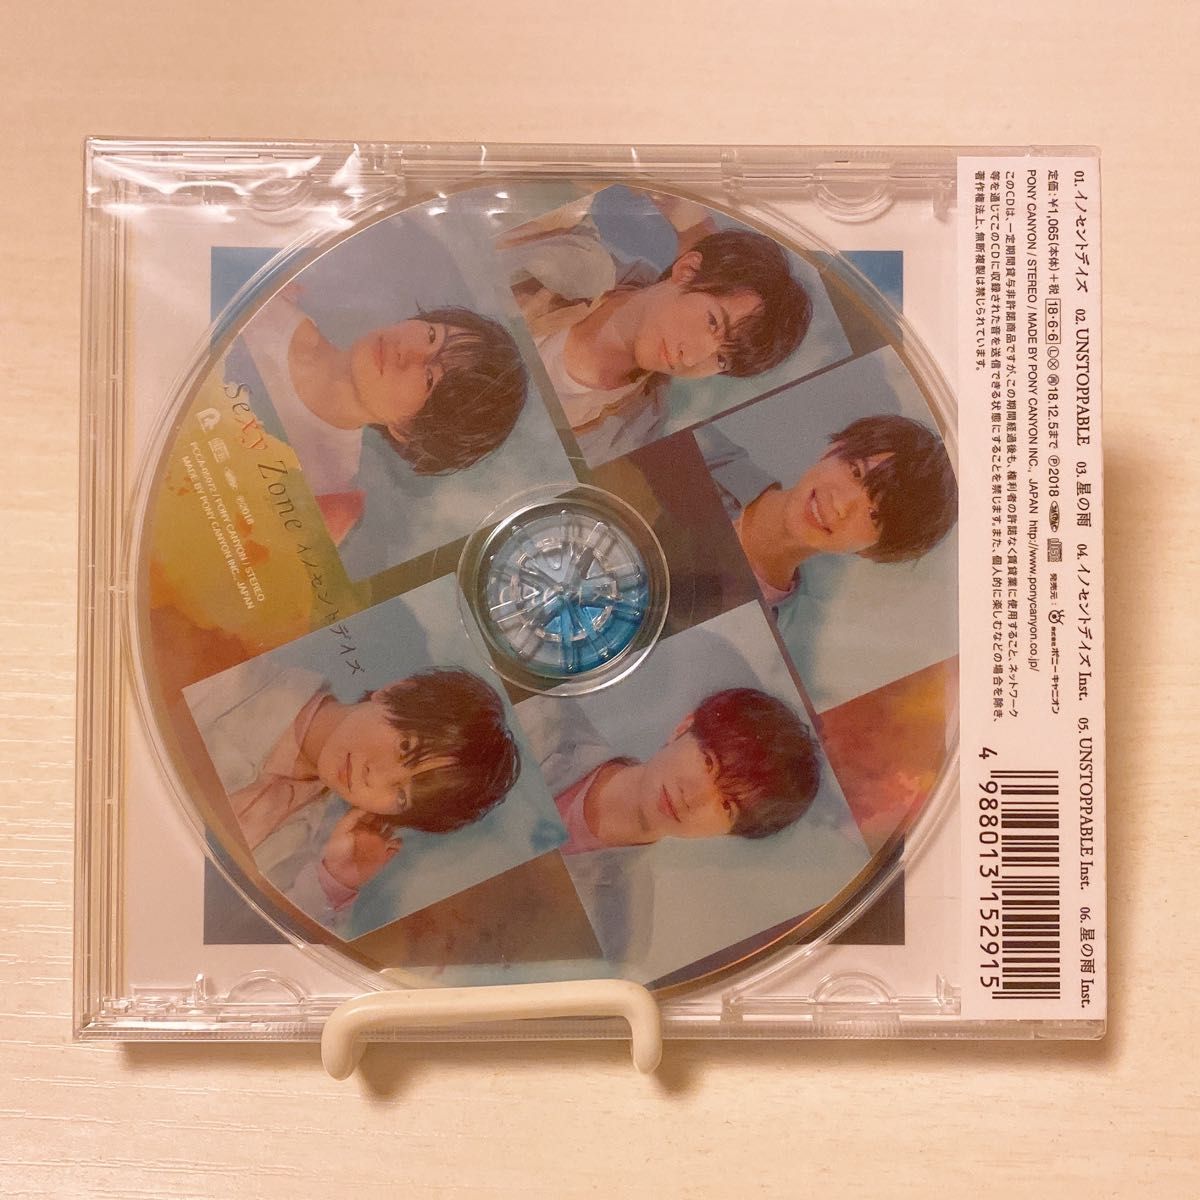 SexyZone シングル「イノセントデイズ 」通常盤 イノセントデイズ Sexy Zone CD+DVD